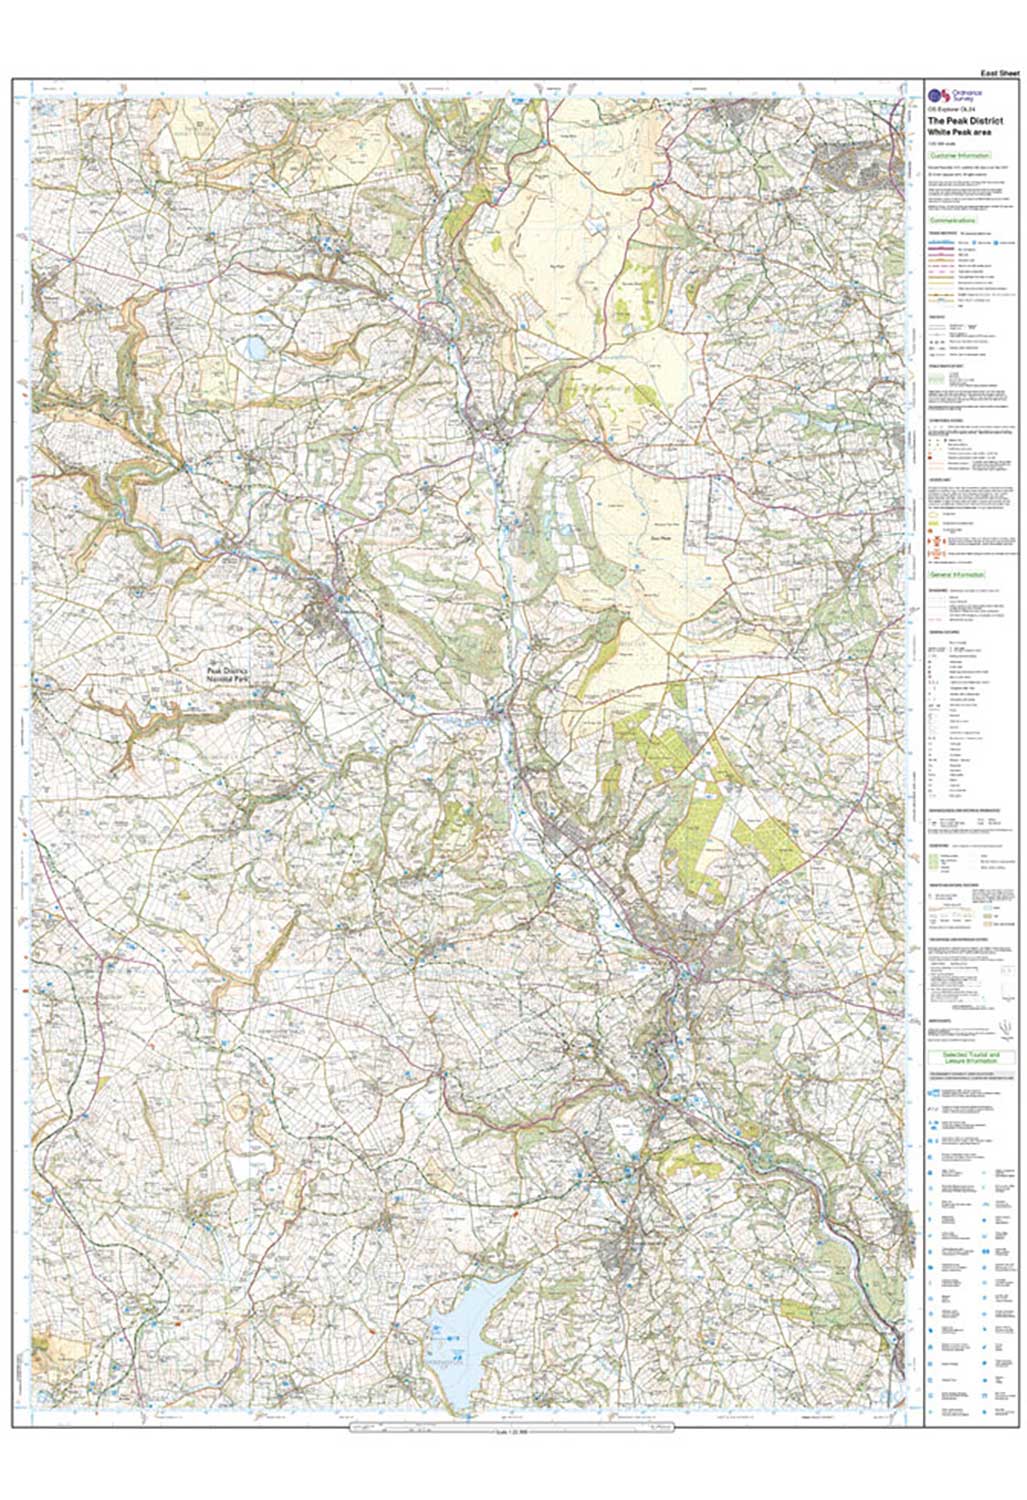 Ordnance Survey The Peak District, White Peak Area - OS Explorer OL24 Map